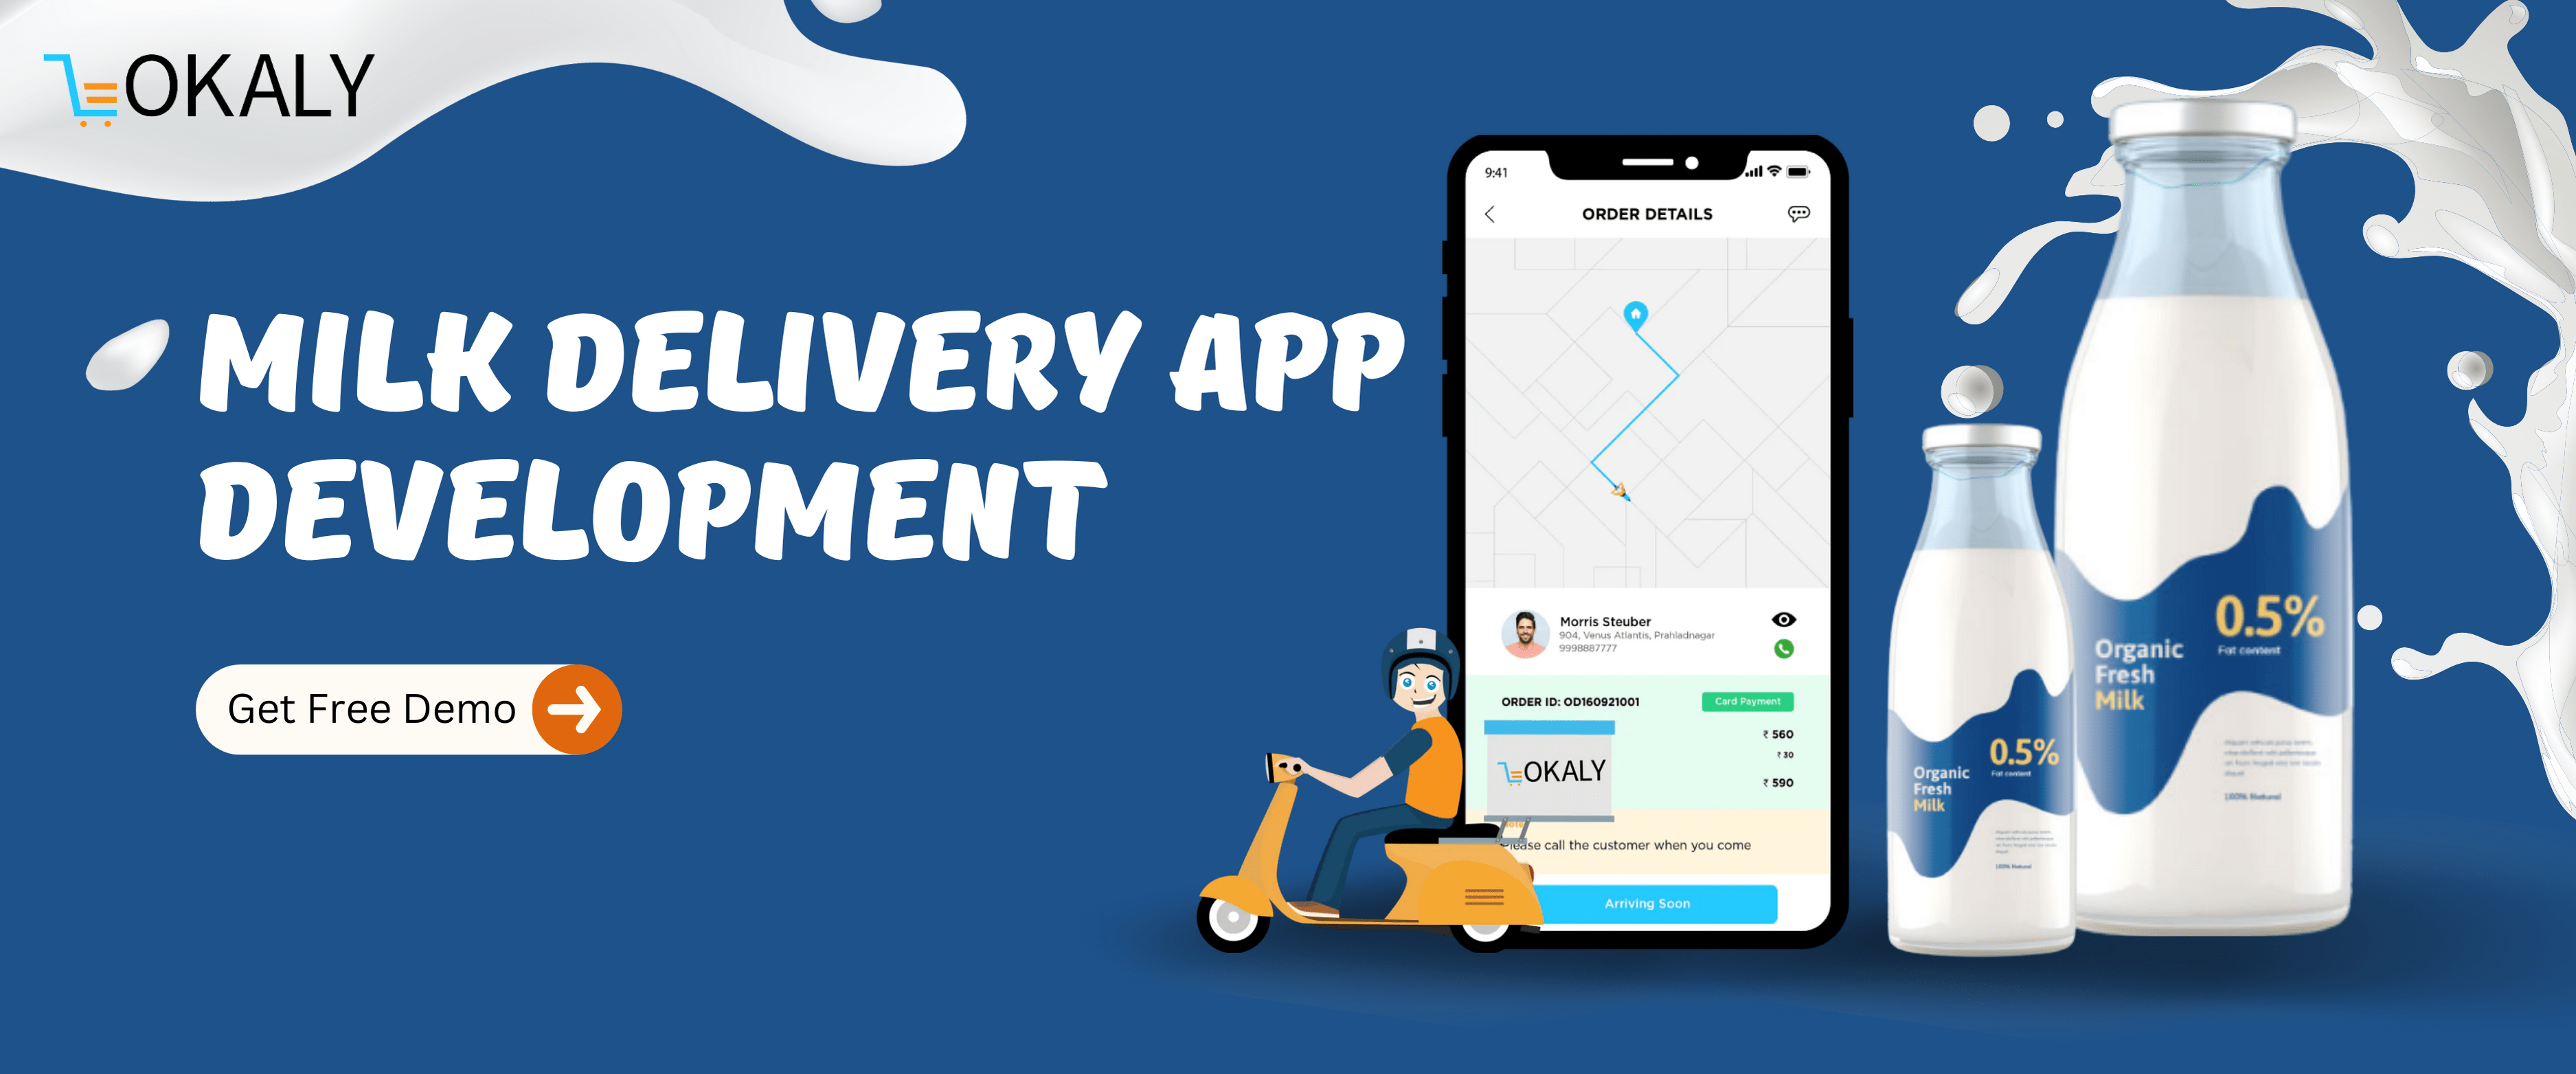 Milk Delivery App Development Company | Lokaly